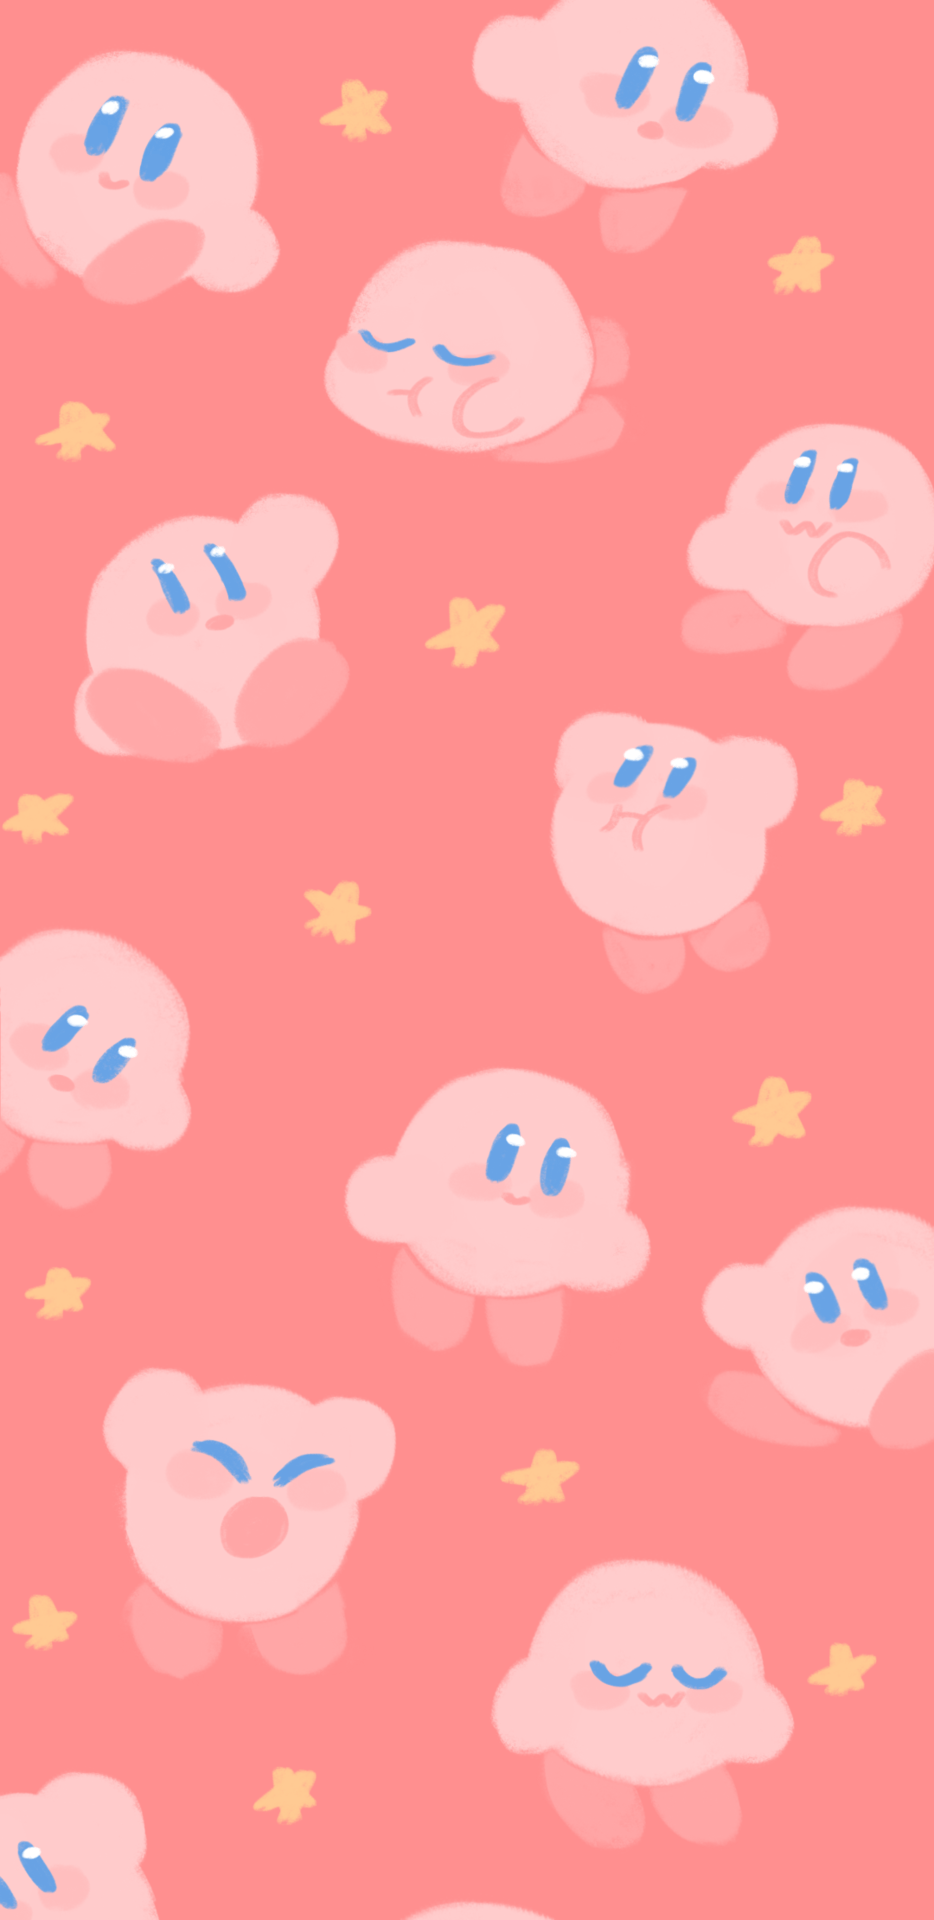 Twitter  Kirby  Kawaii wallpaper Cute patterns wallpaper Wallpaper  iphone cute